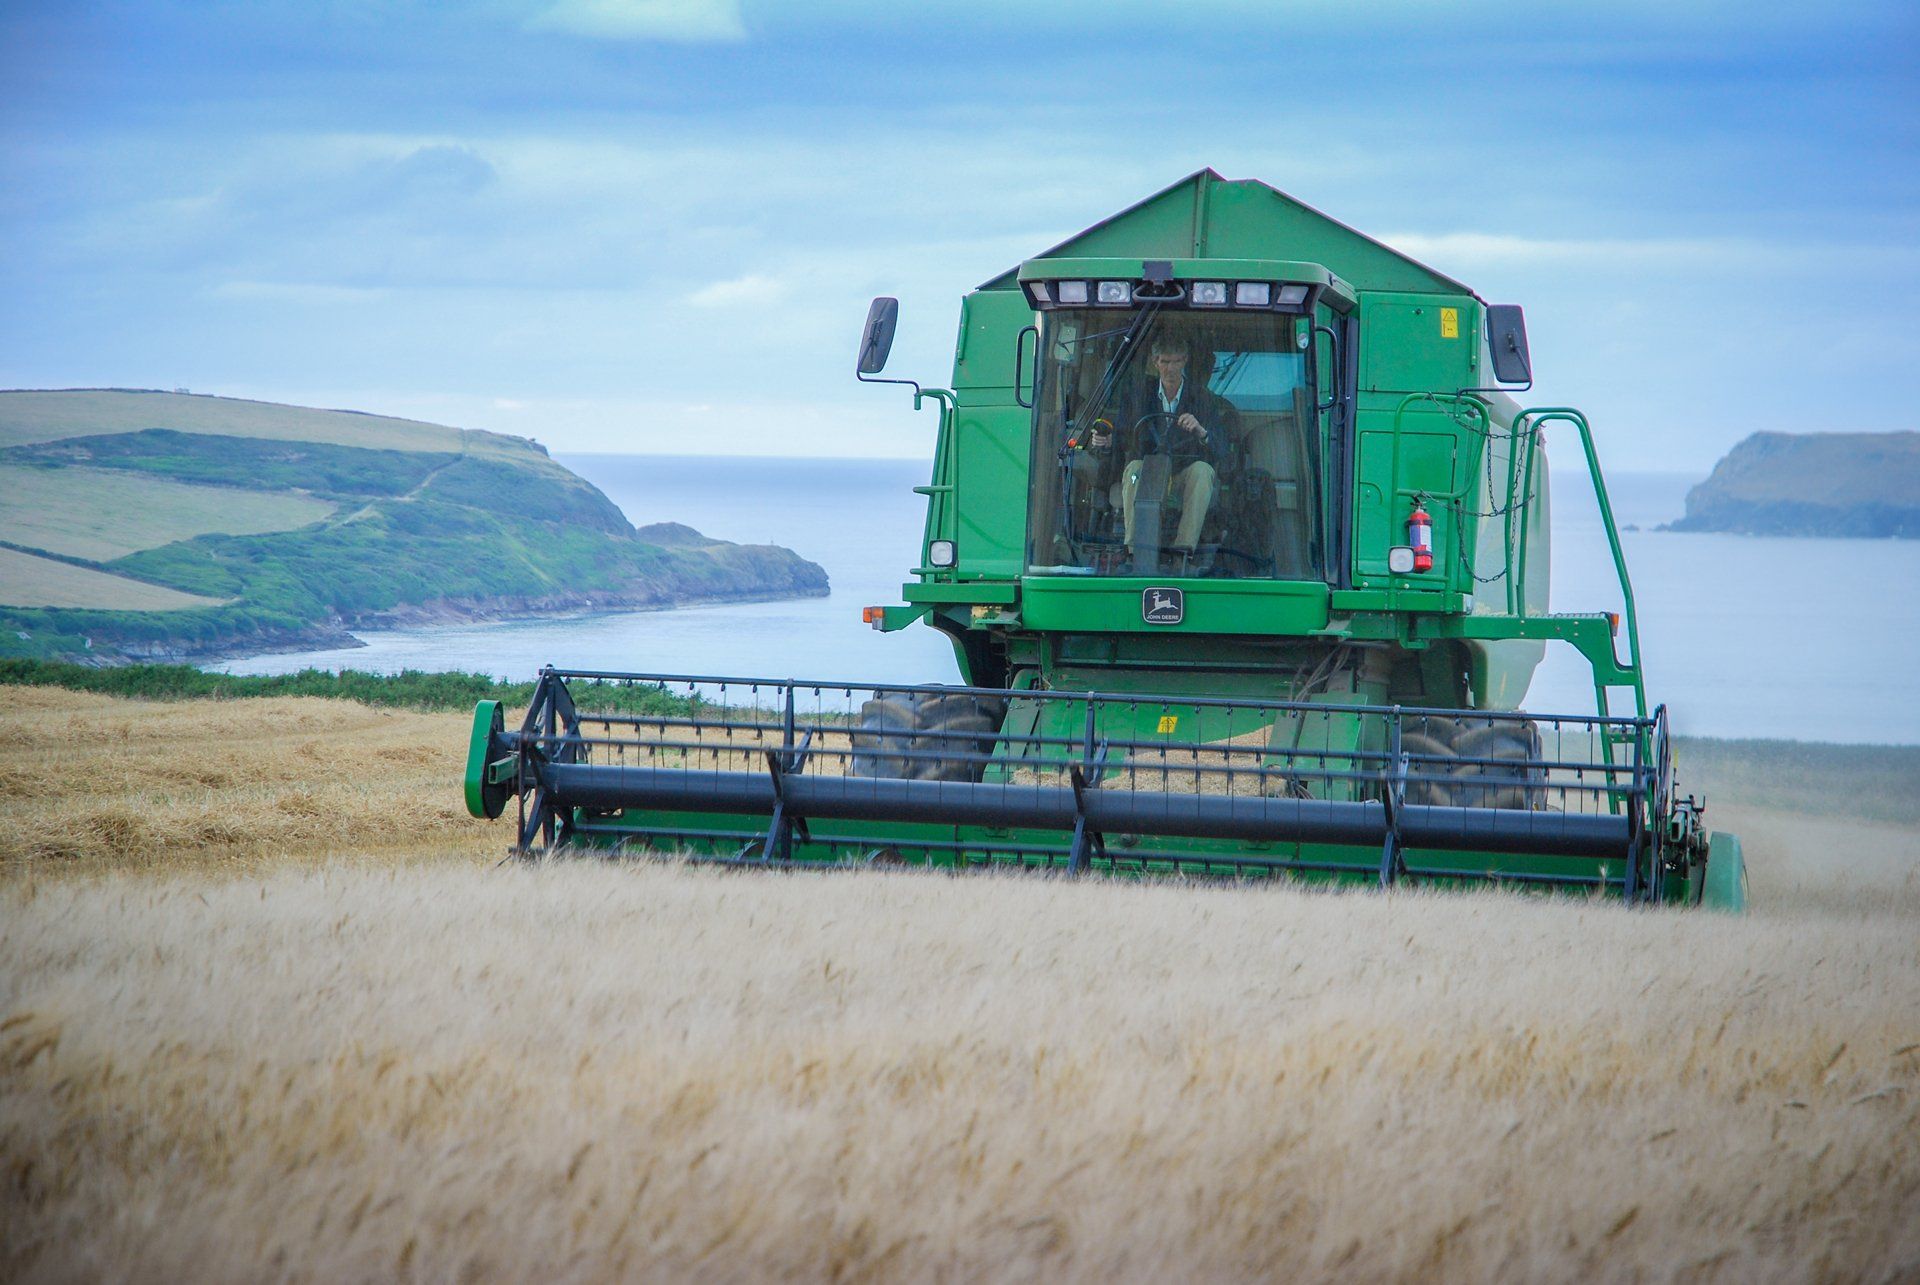 Harvesting the barley